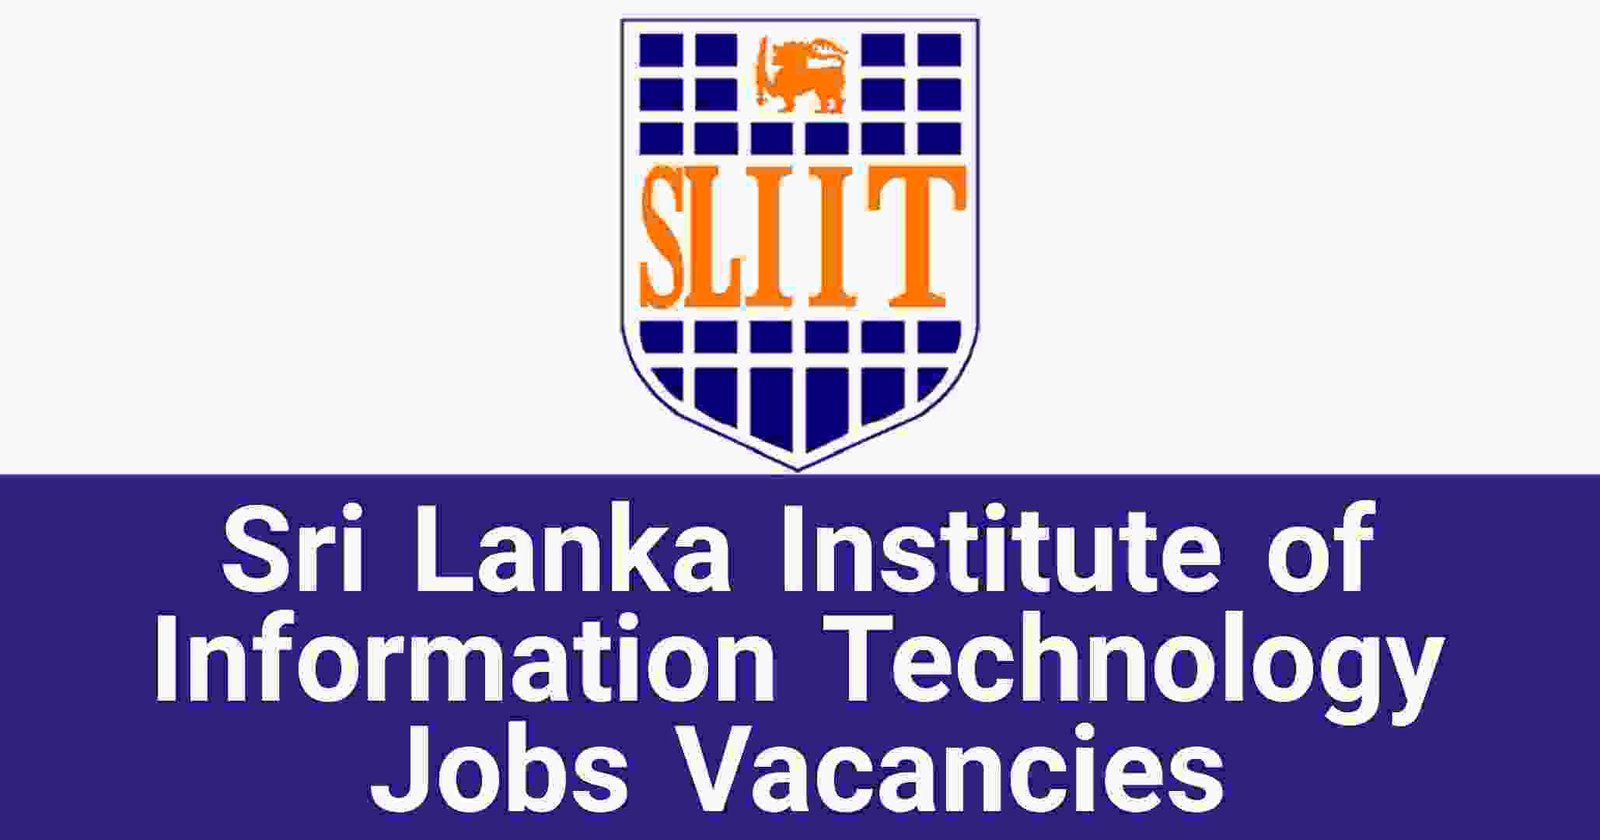 Sri Lanka Institute of Information Technology Jobs Vacancies